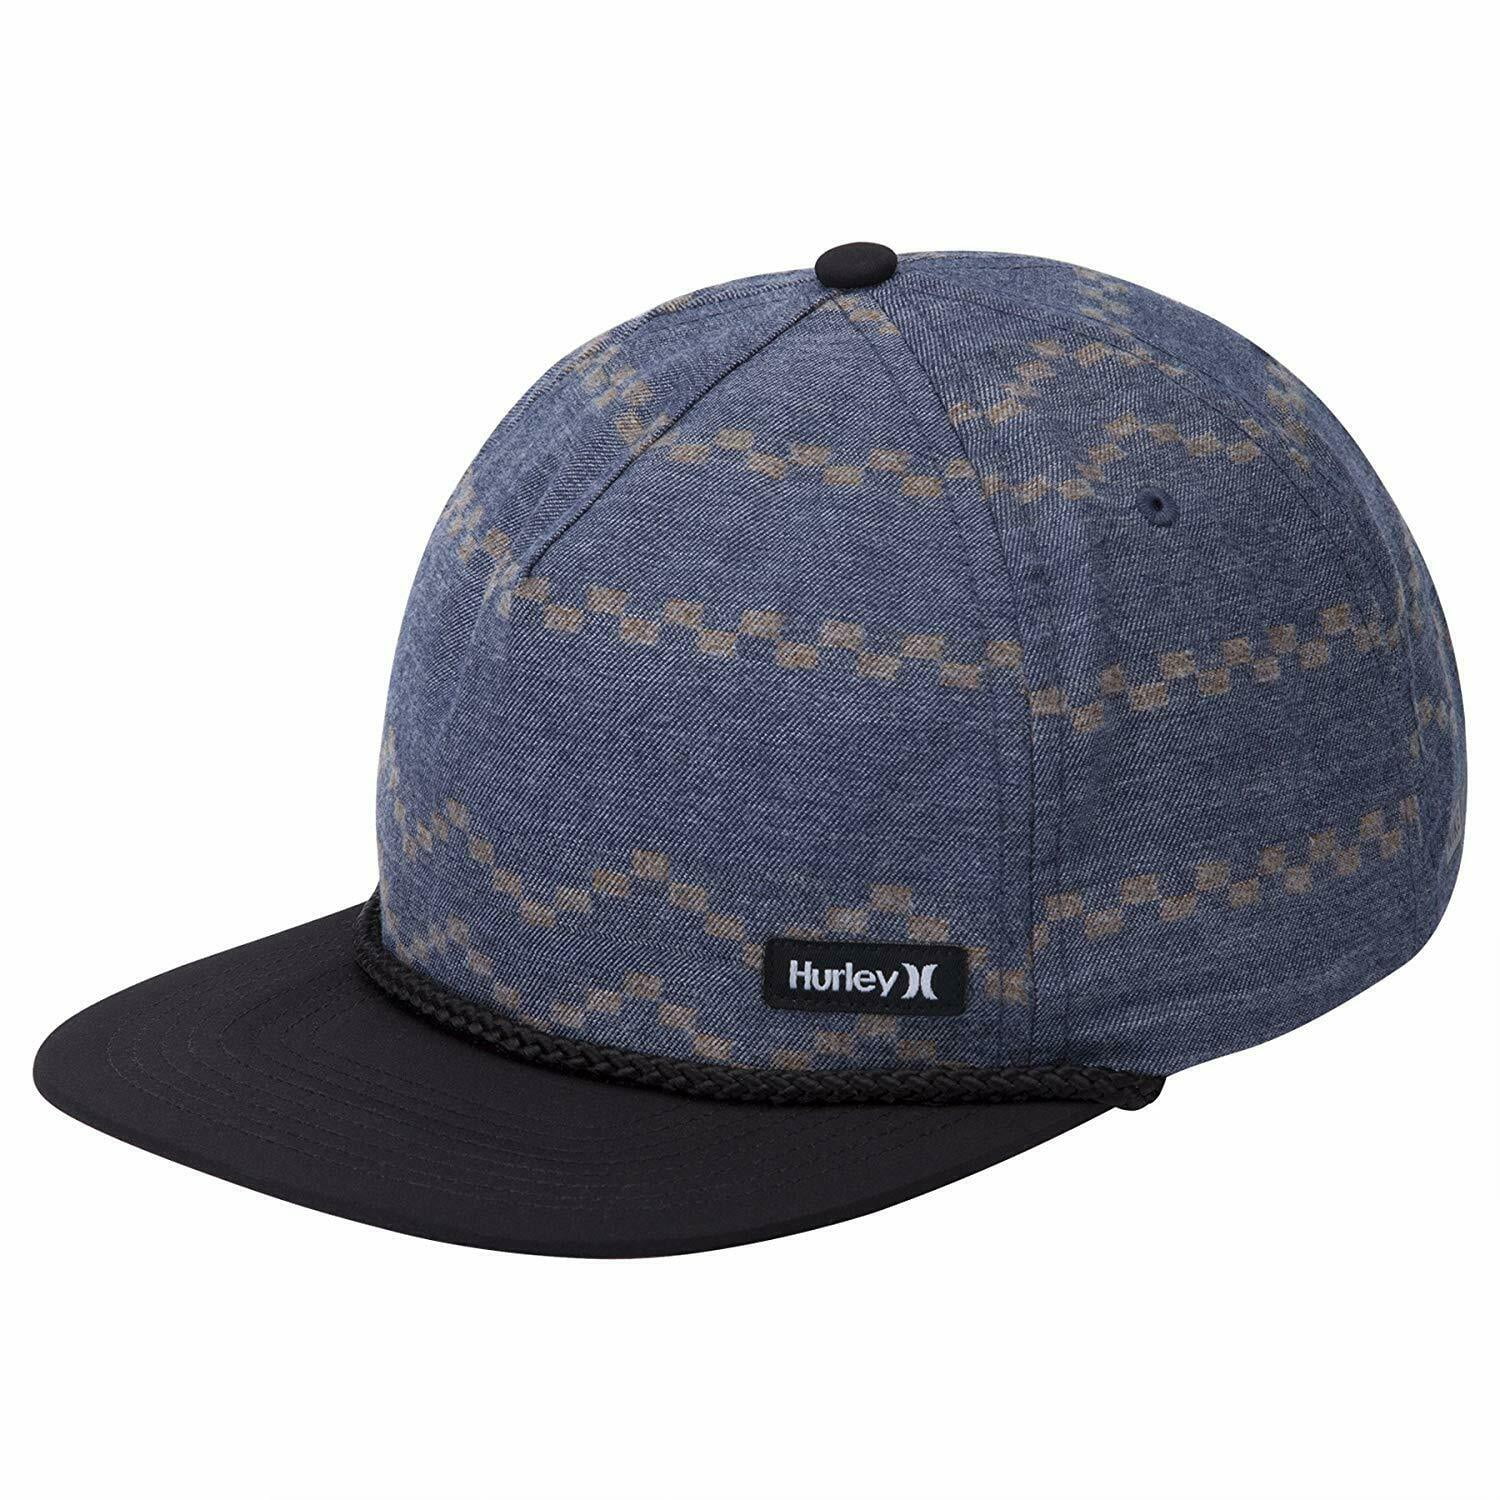 NEW Hurley Blocked 2.0 Trucker Snapback Obsidian Embroidered Hat Cap 